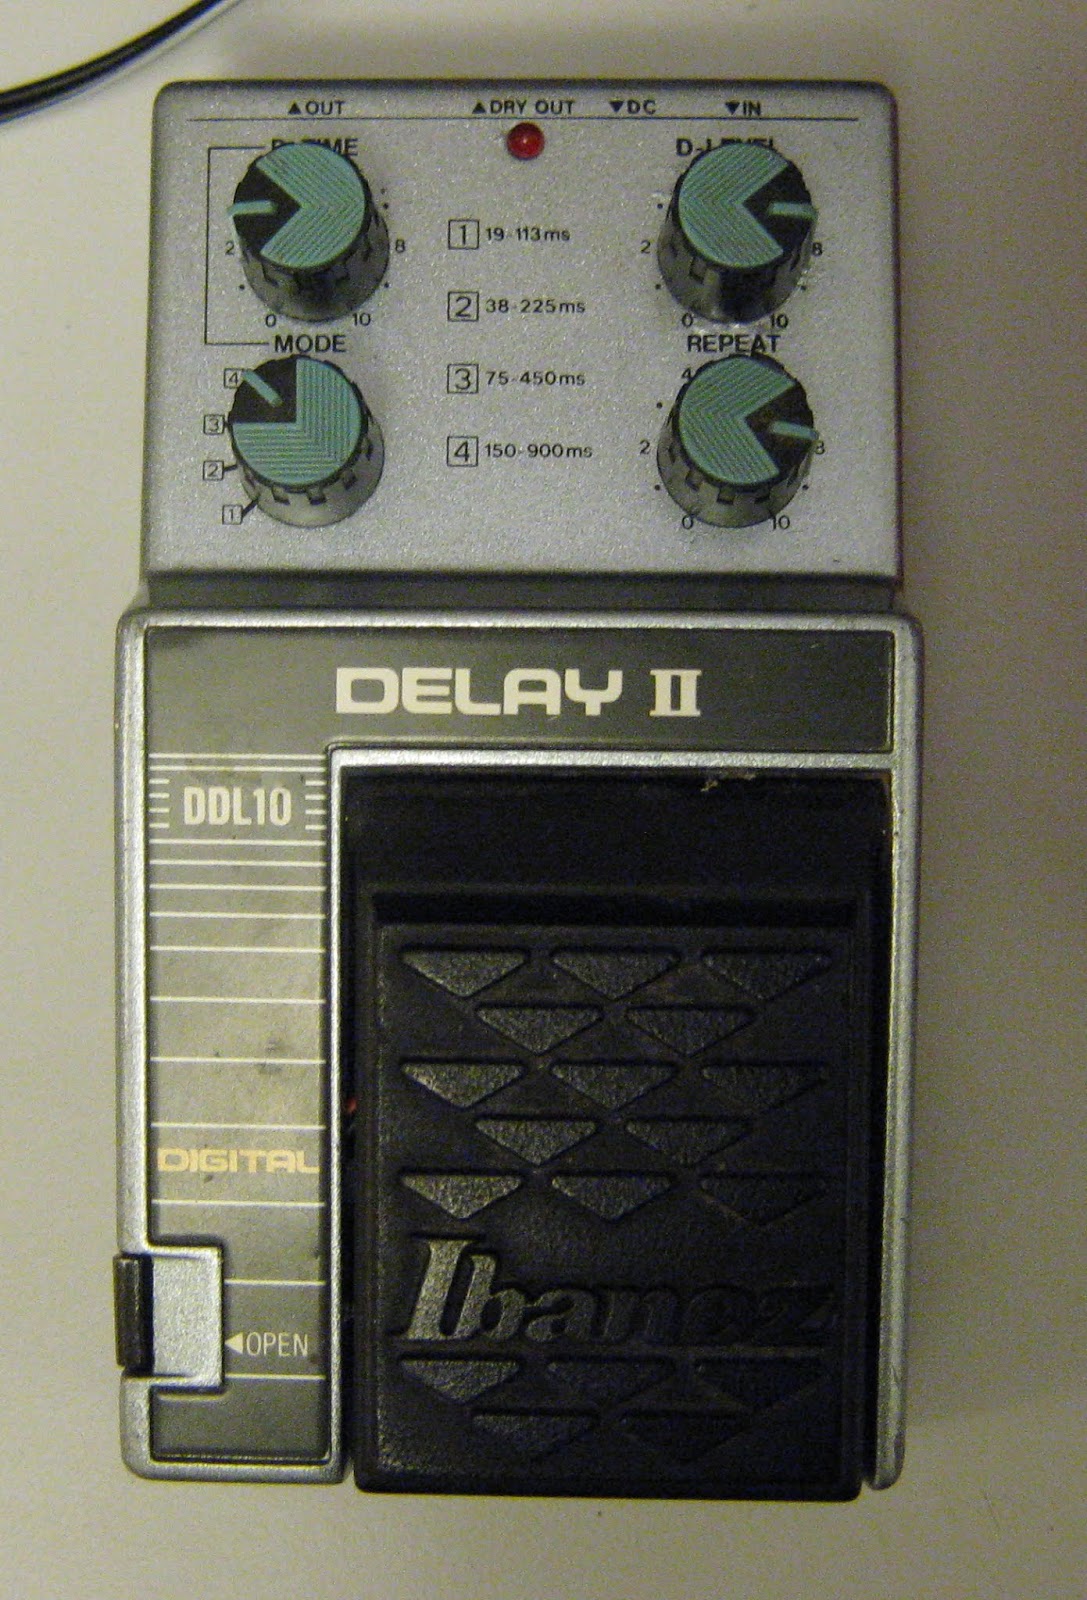 False Electronics: Ibanez DDL10 Delay II